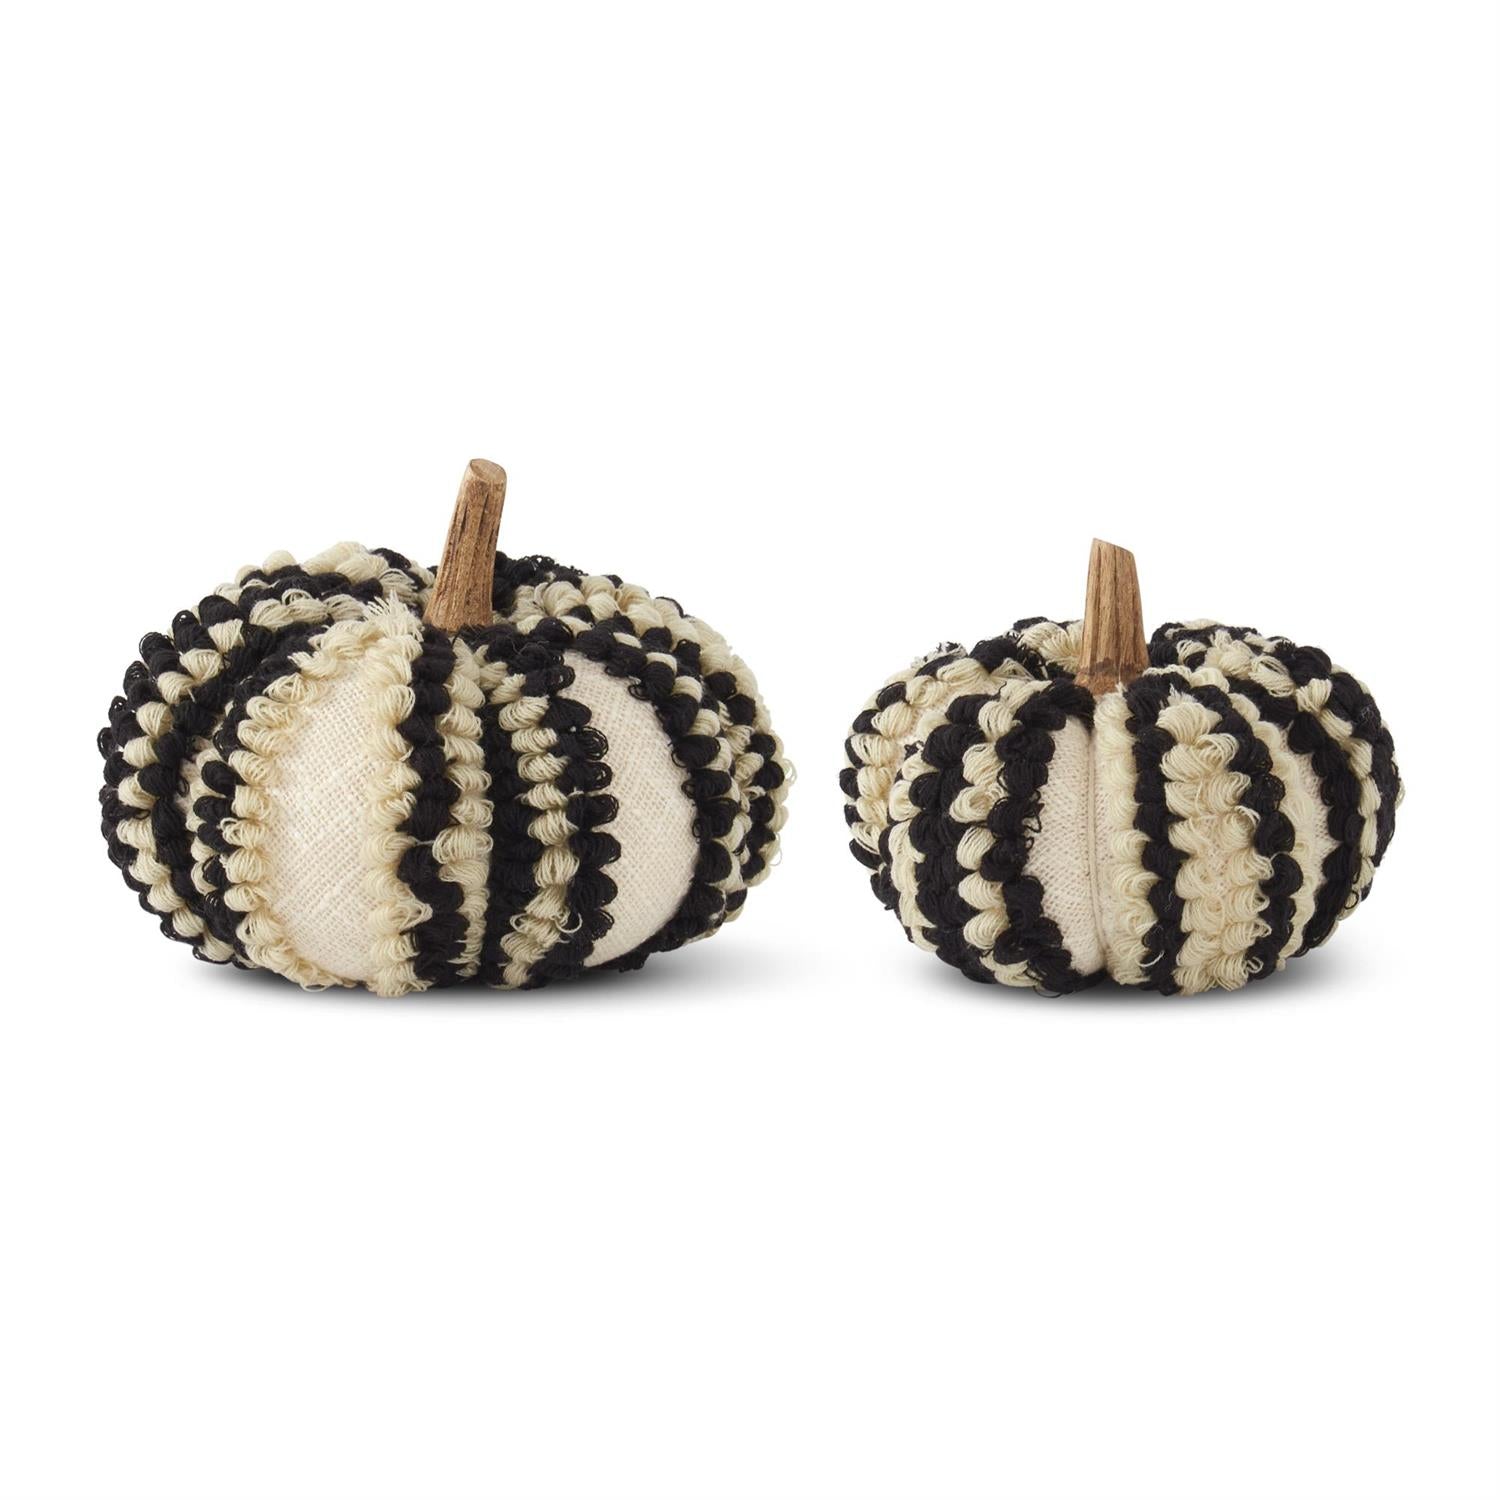 Cream & Black Striped Knit Pumpkin